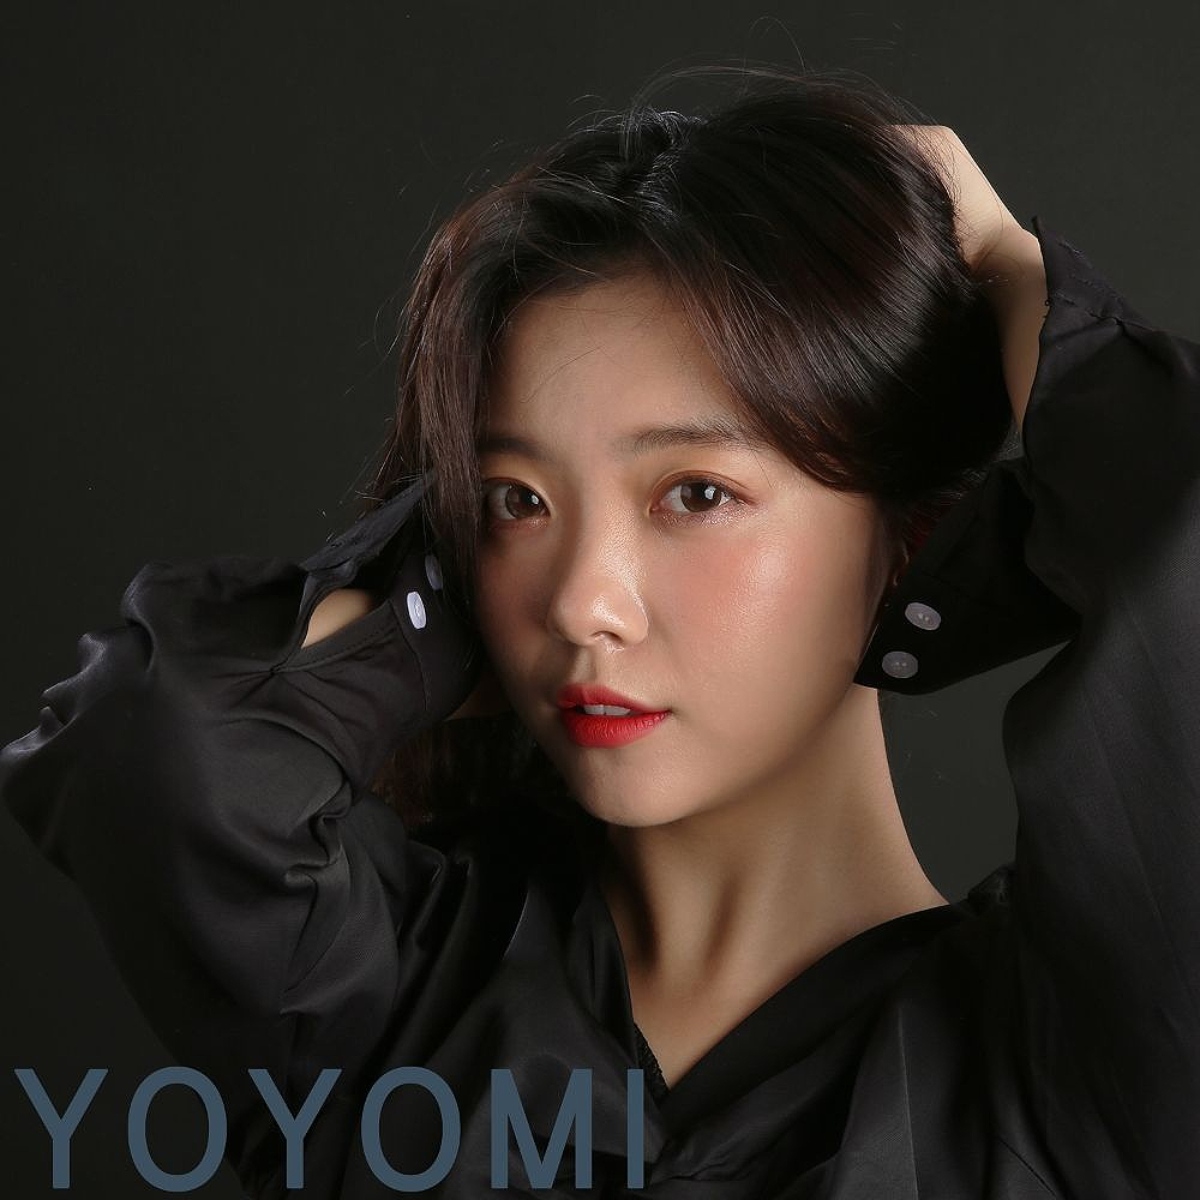 Sängerin Yoyomi